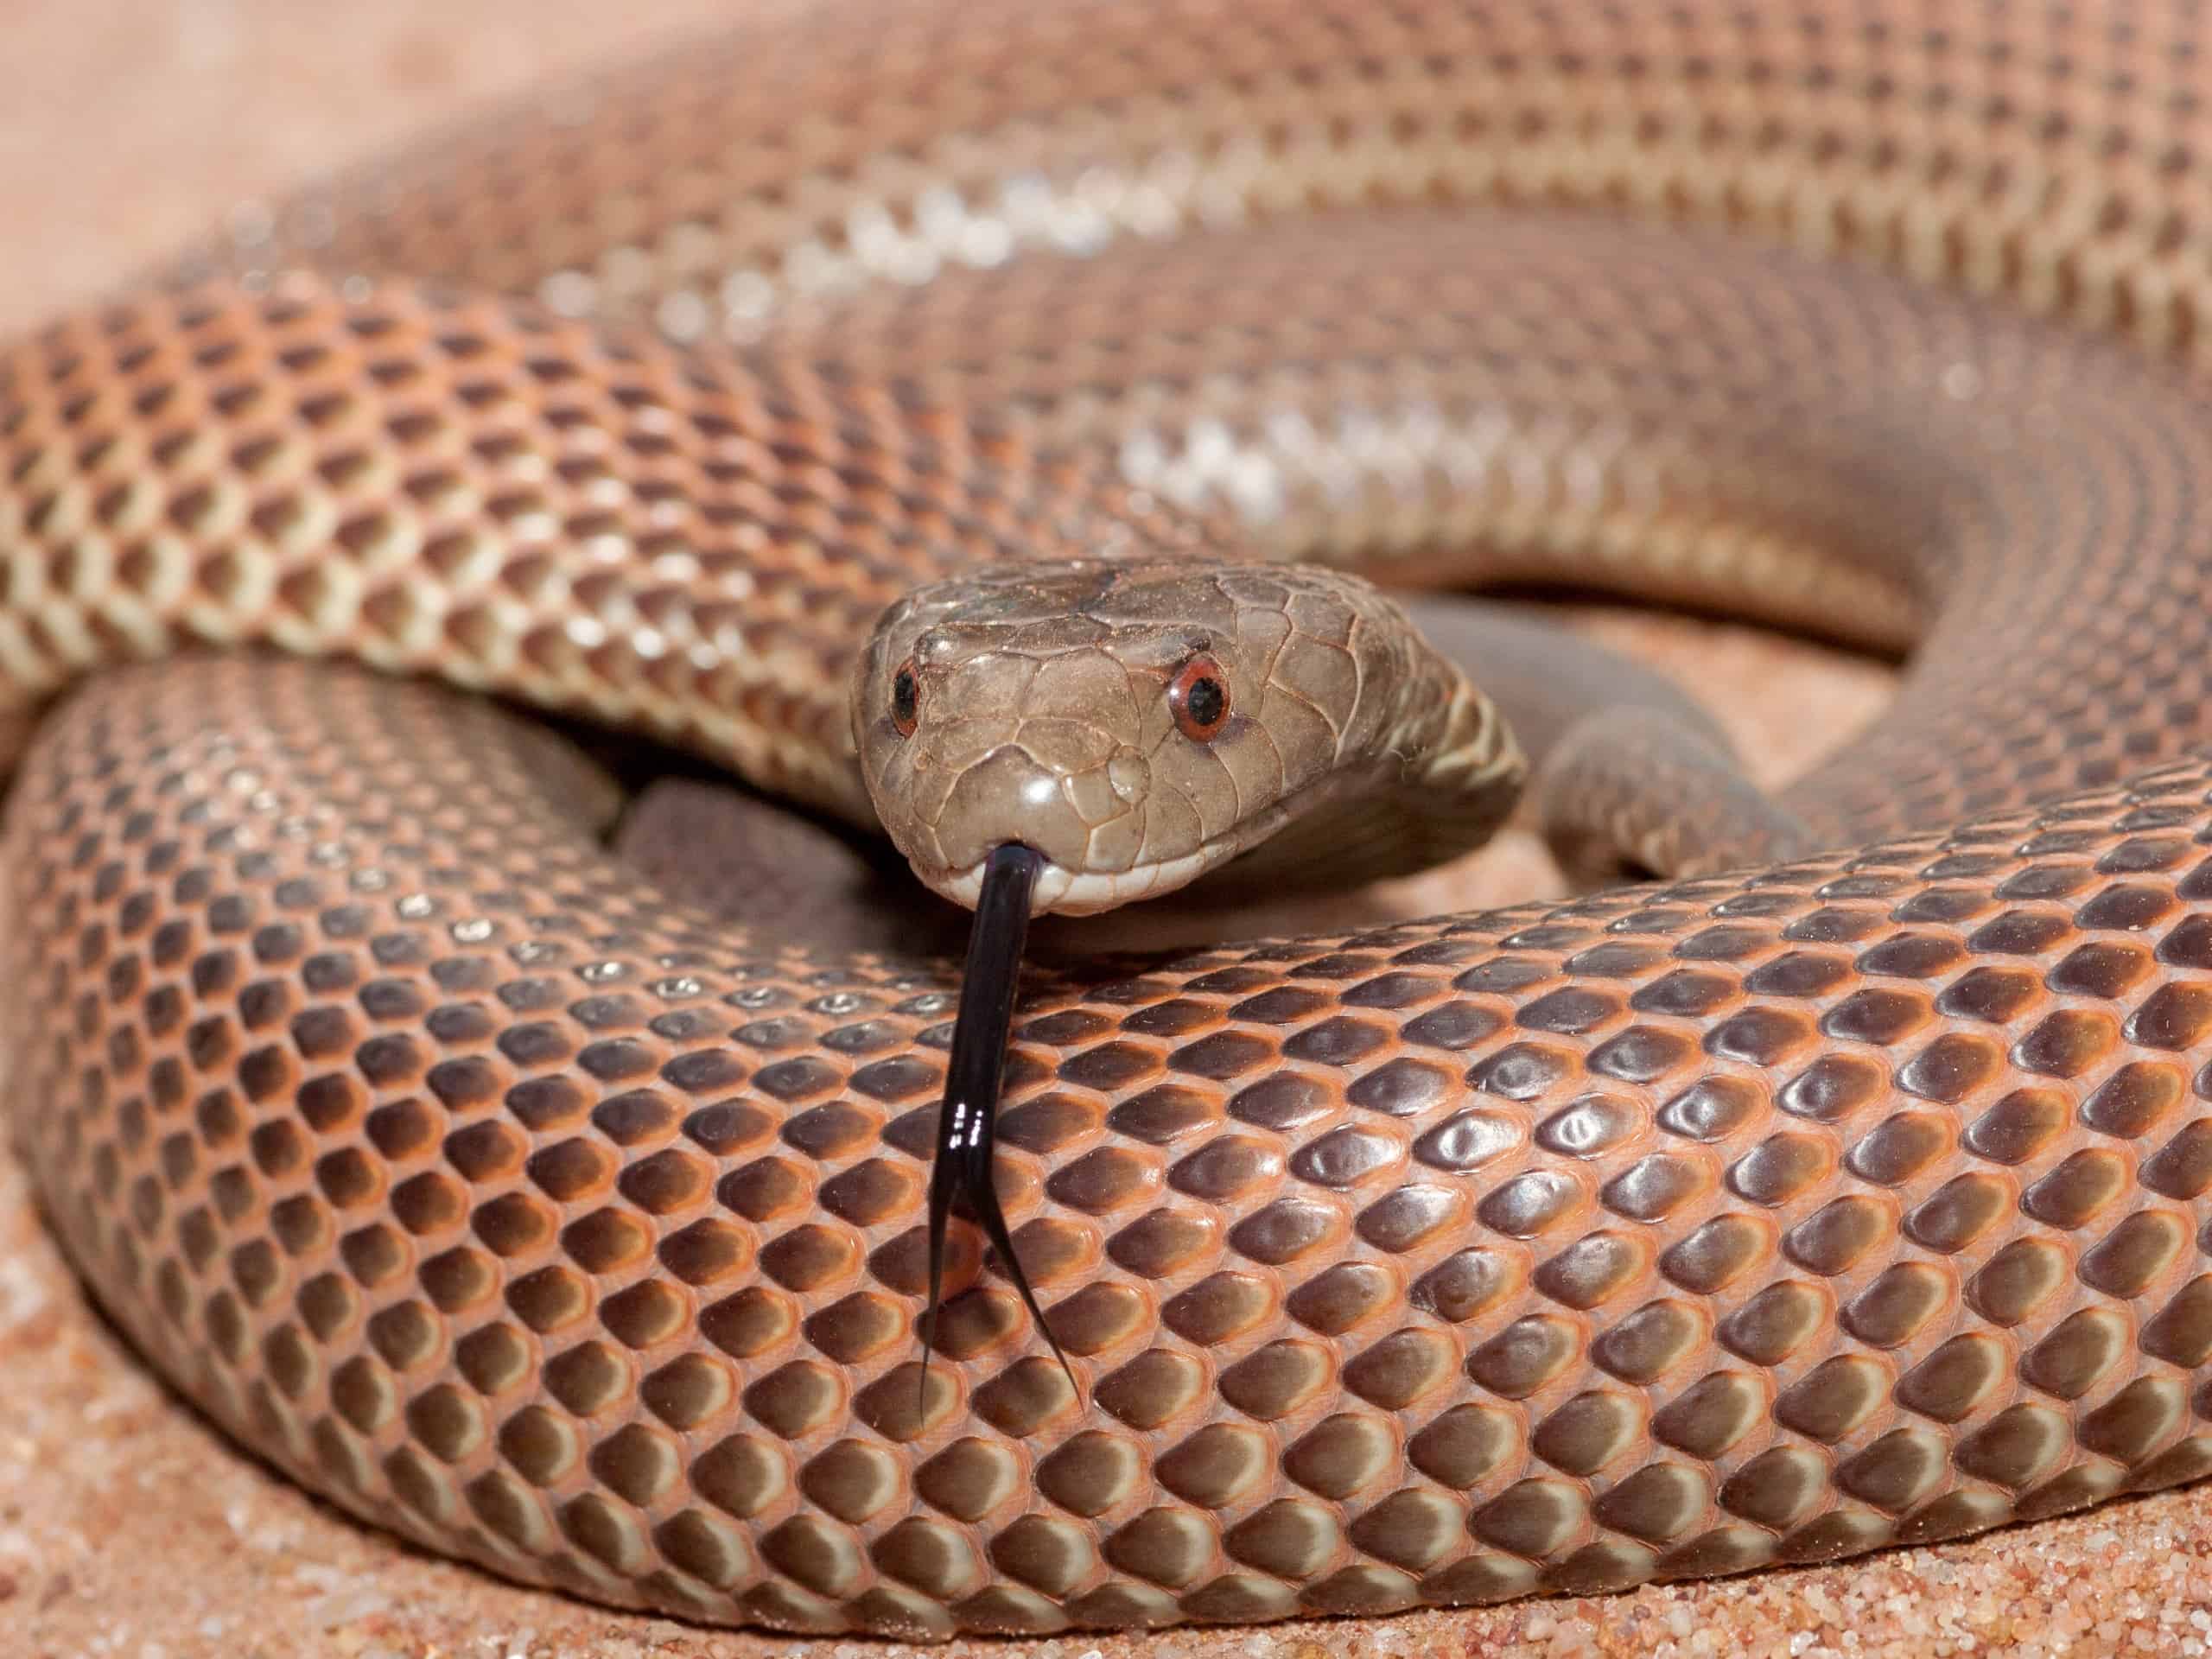 A king brown snake